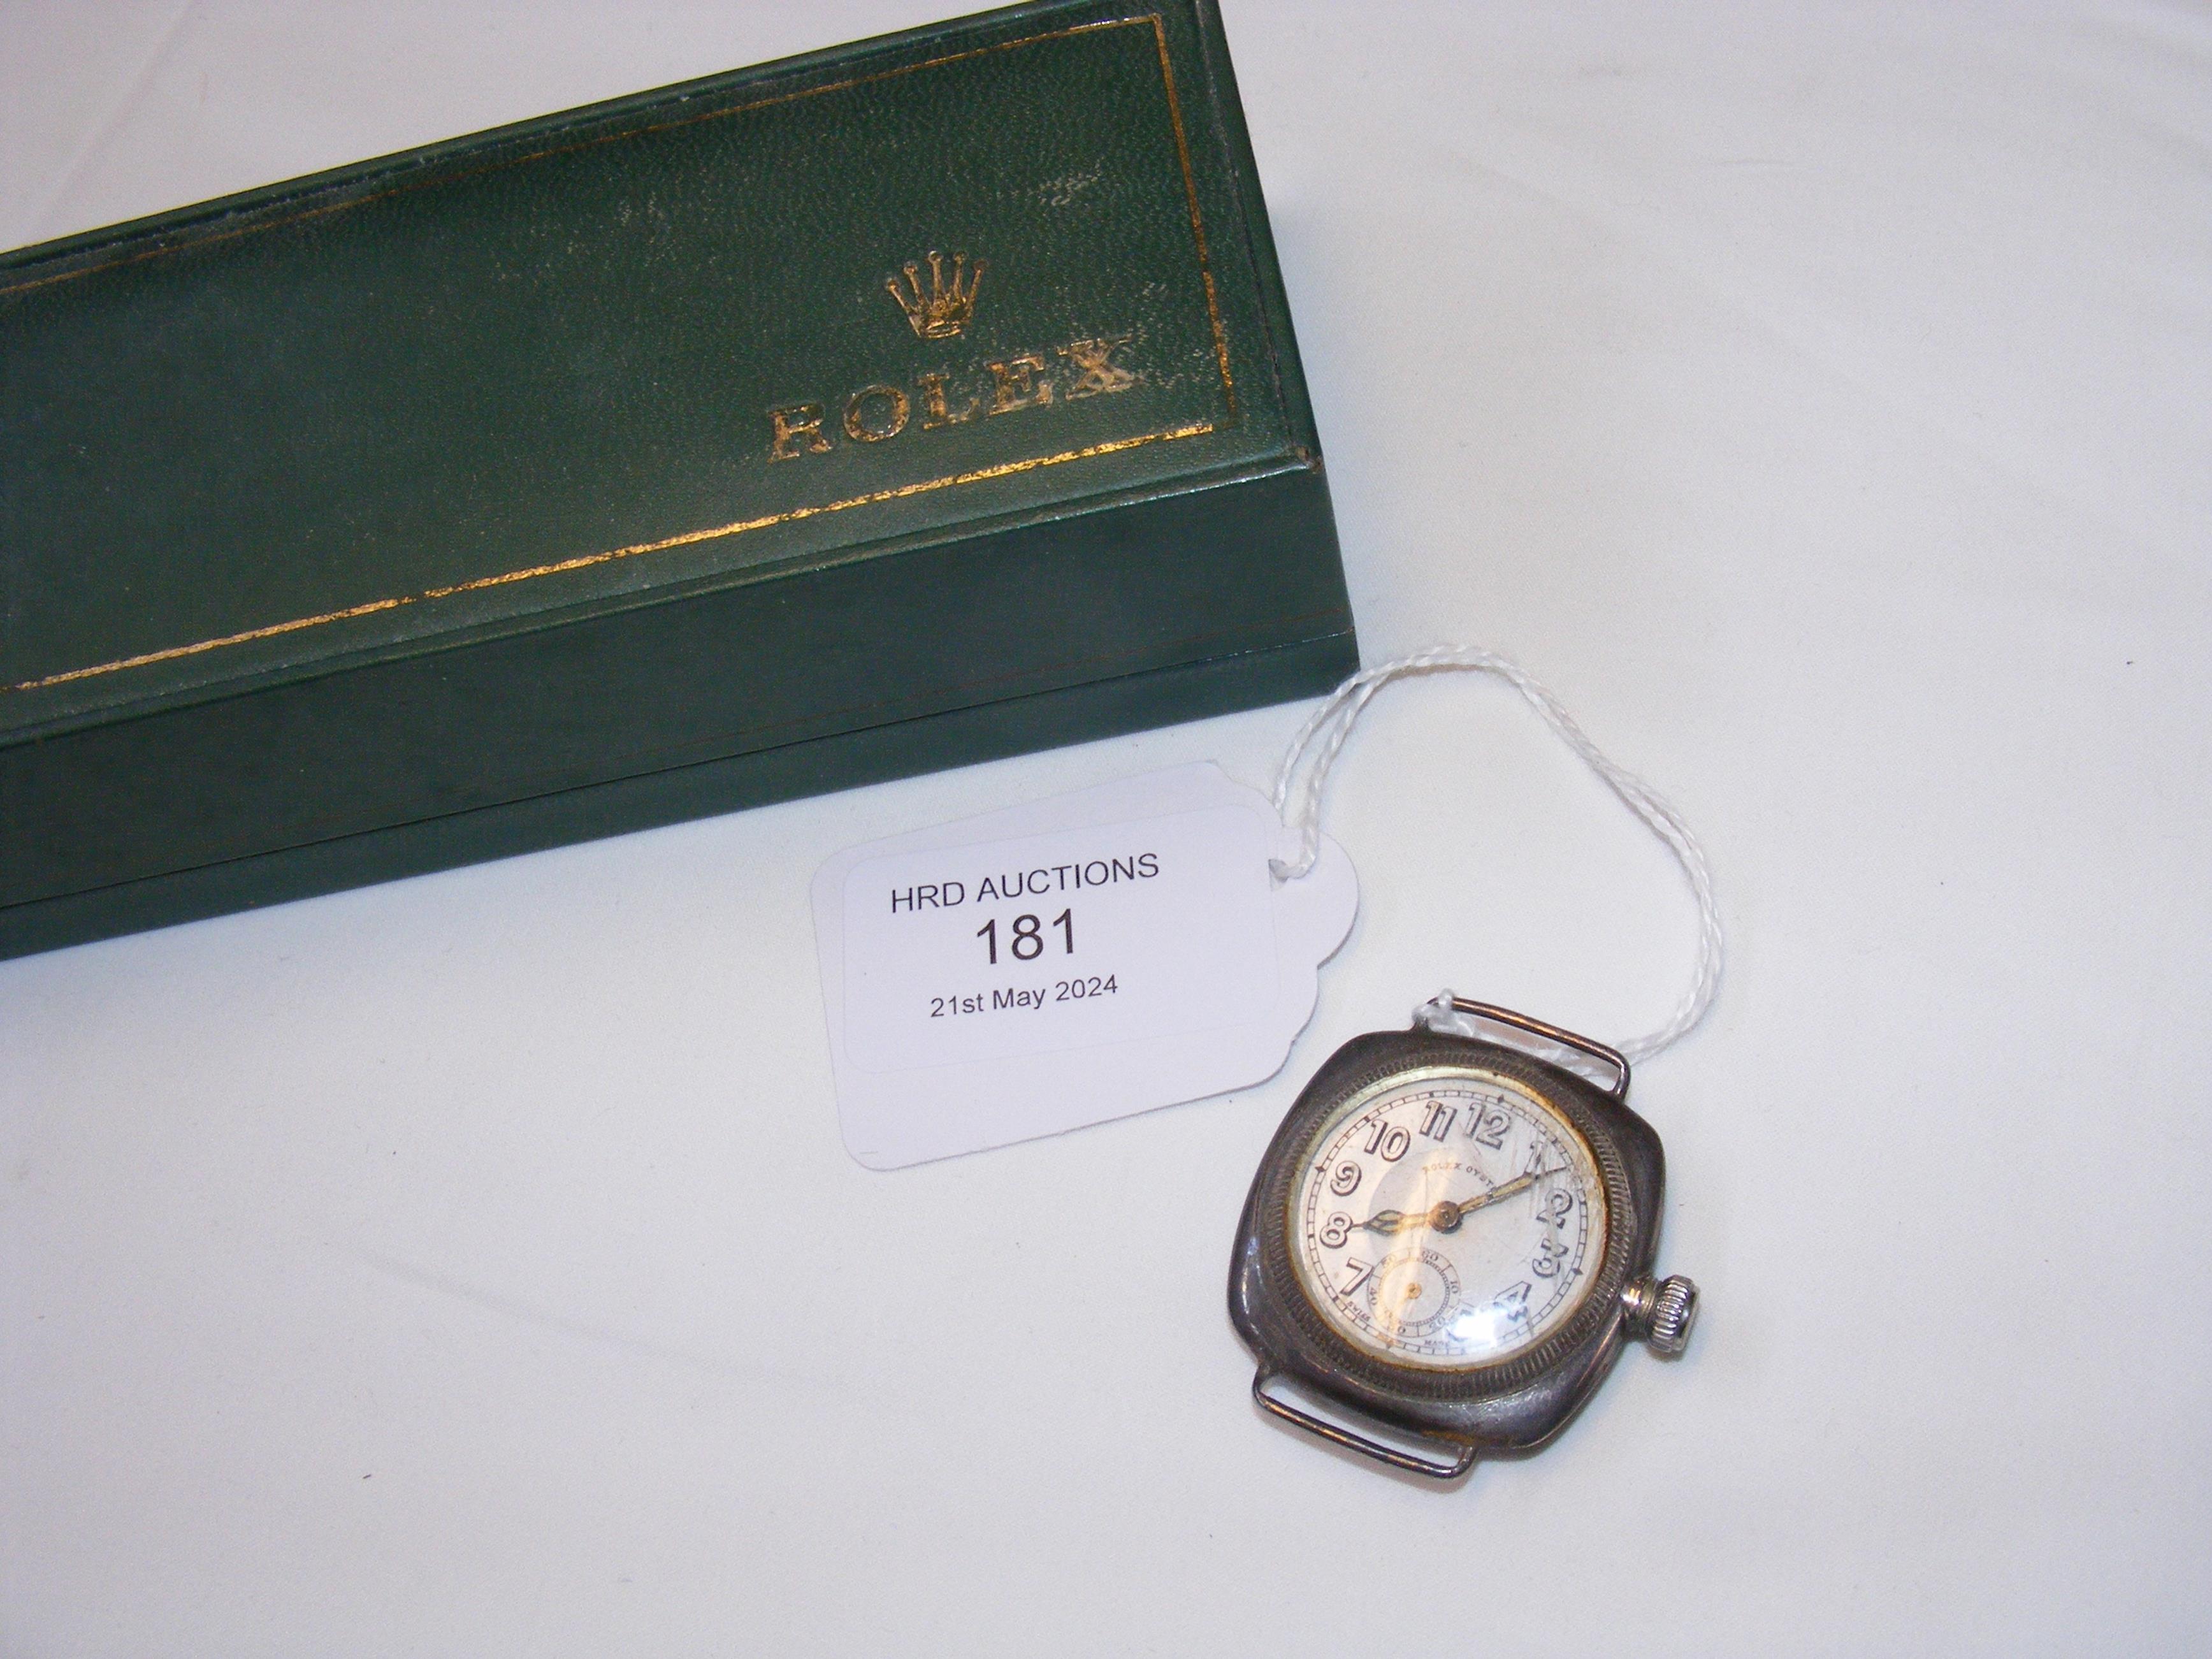 A vintage silver Rolex Oyster wrist watch, the cas